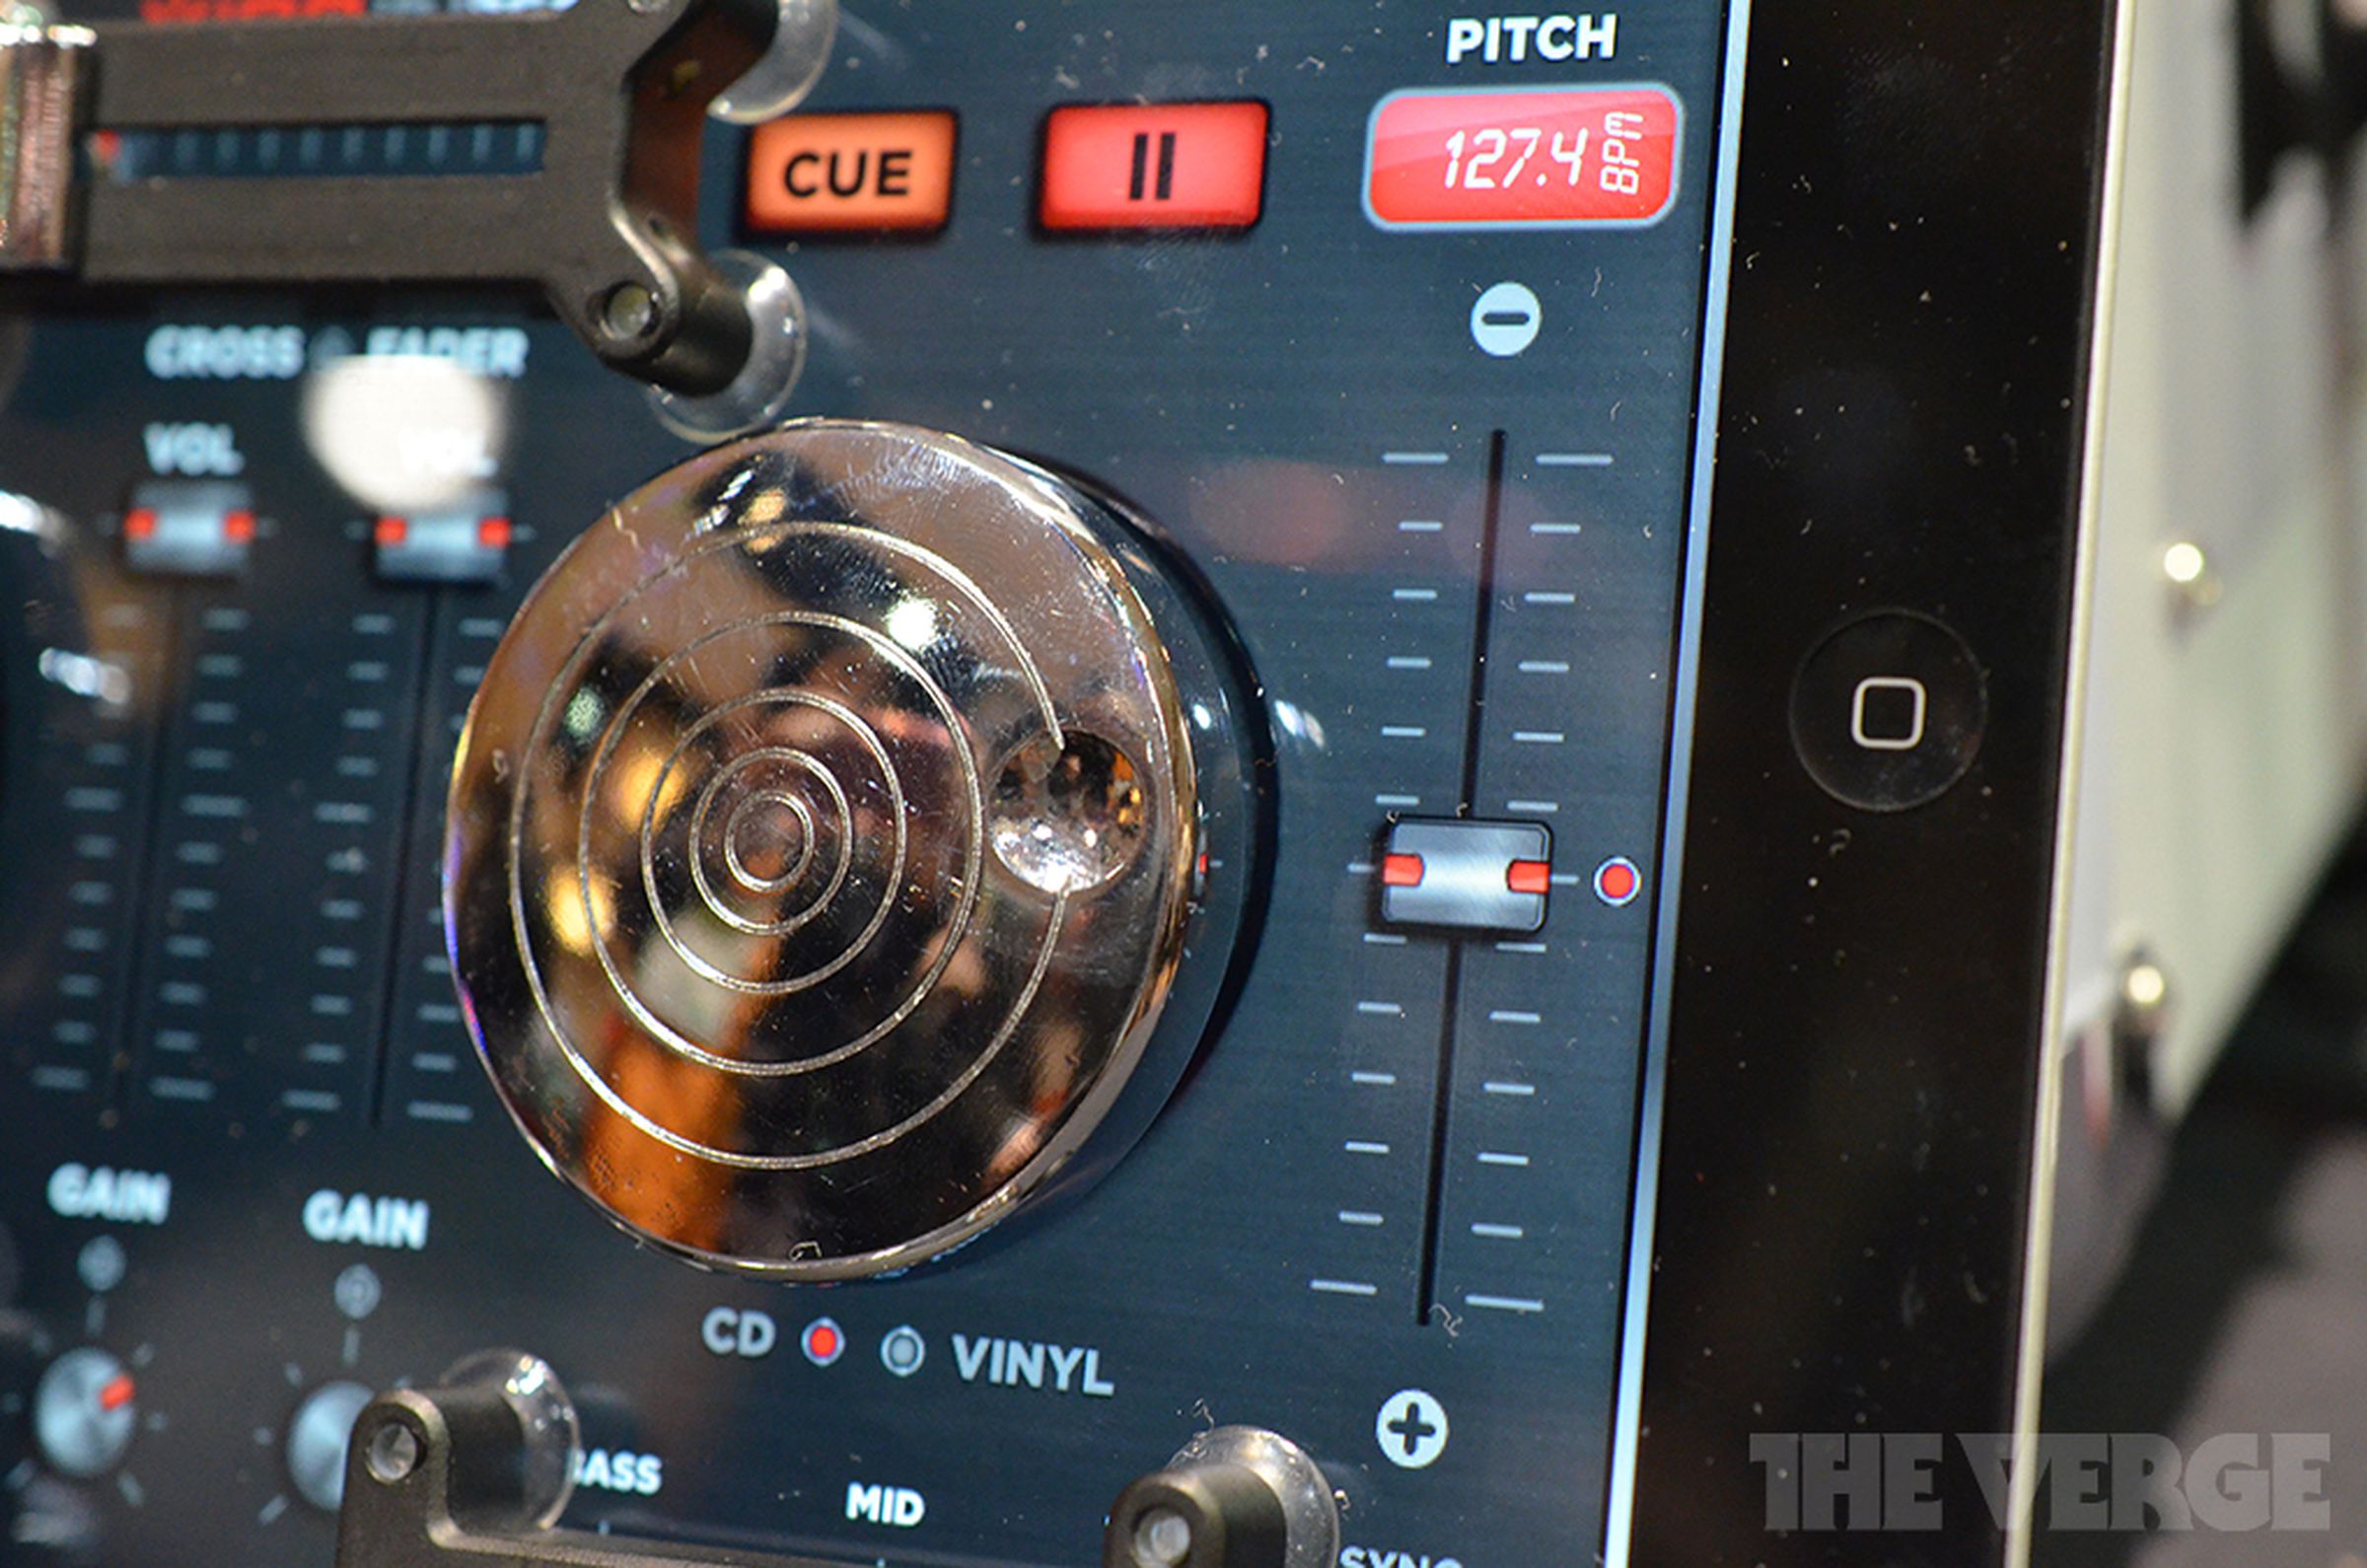 Ion Audio Scratch 2 Go DJ hands-on images